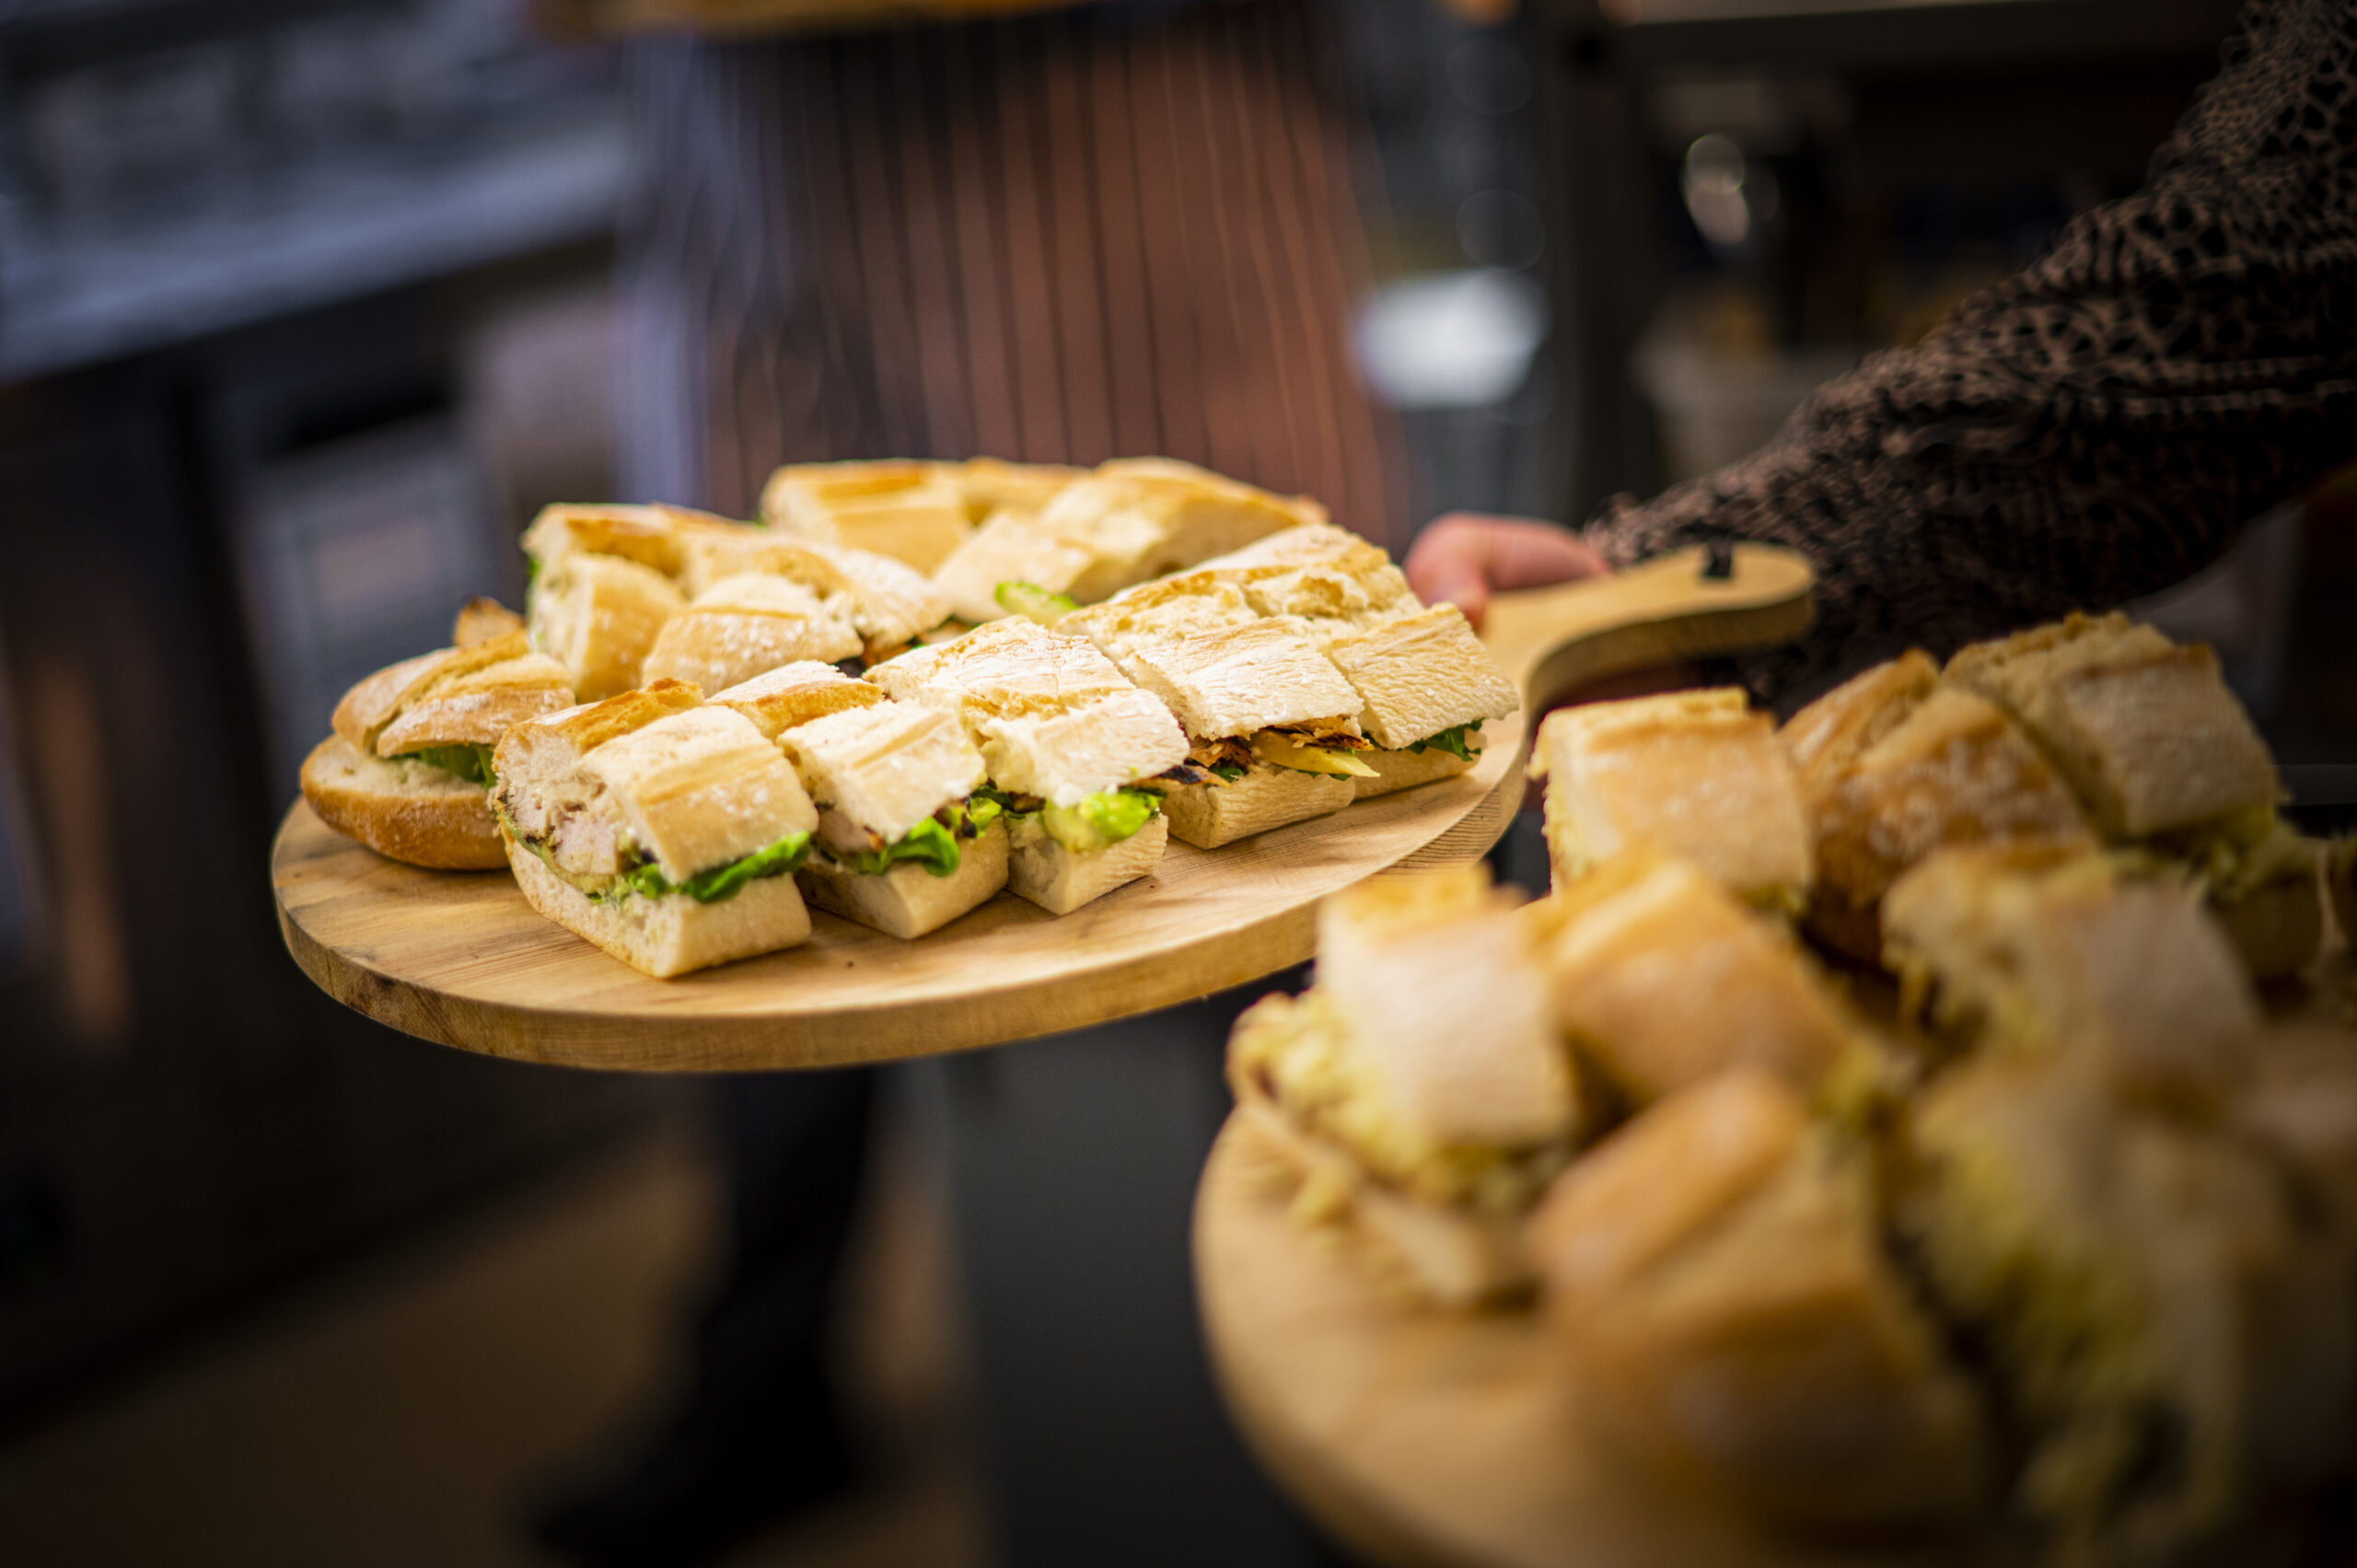 Freshly prepared sandwiches on boards